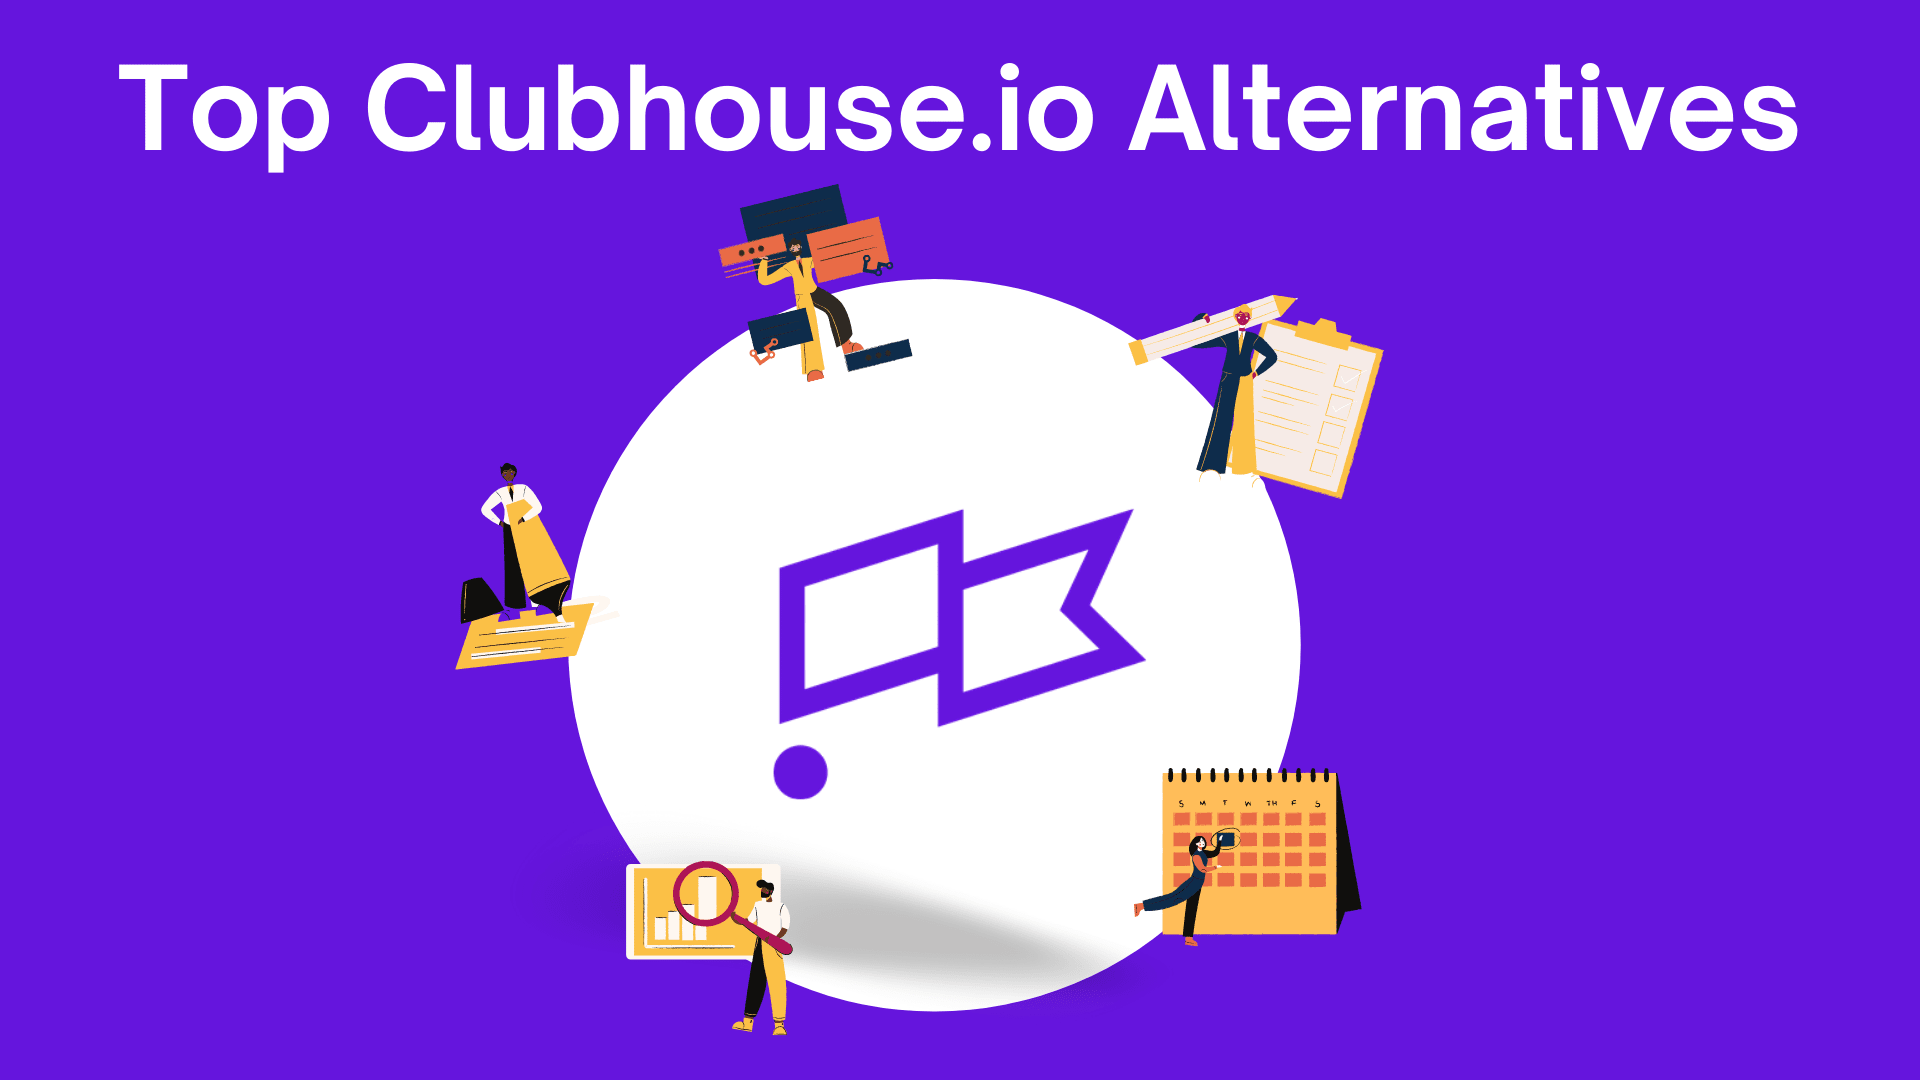 Clubhouse.io alternatives